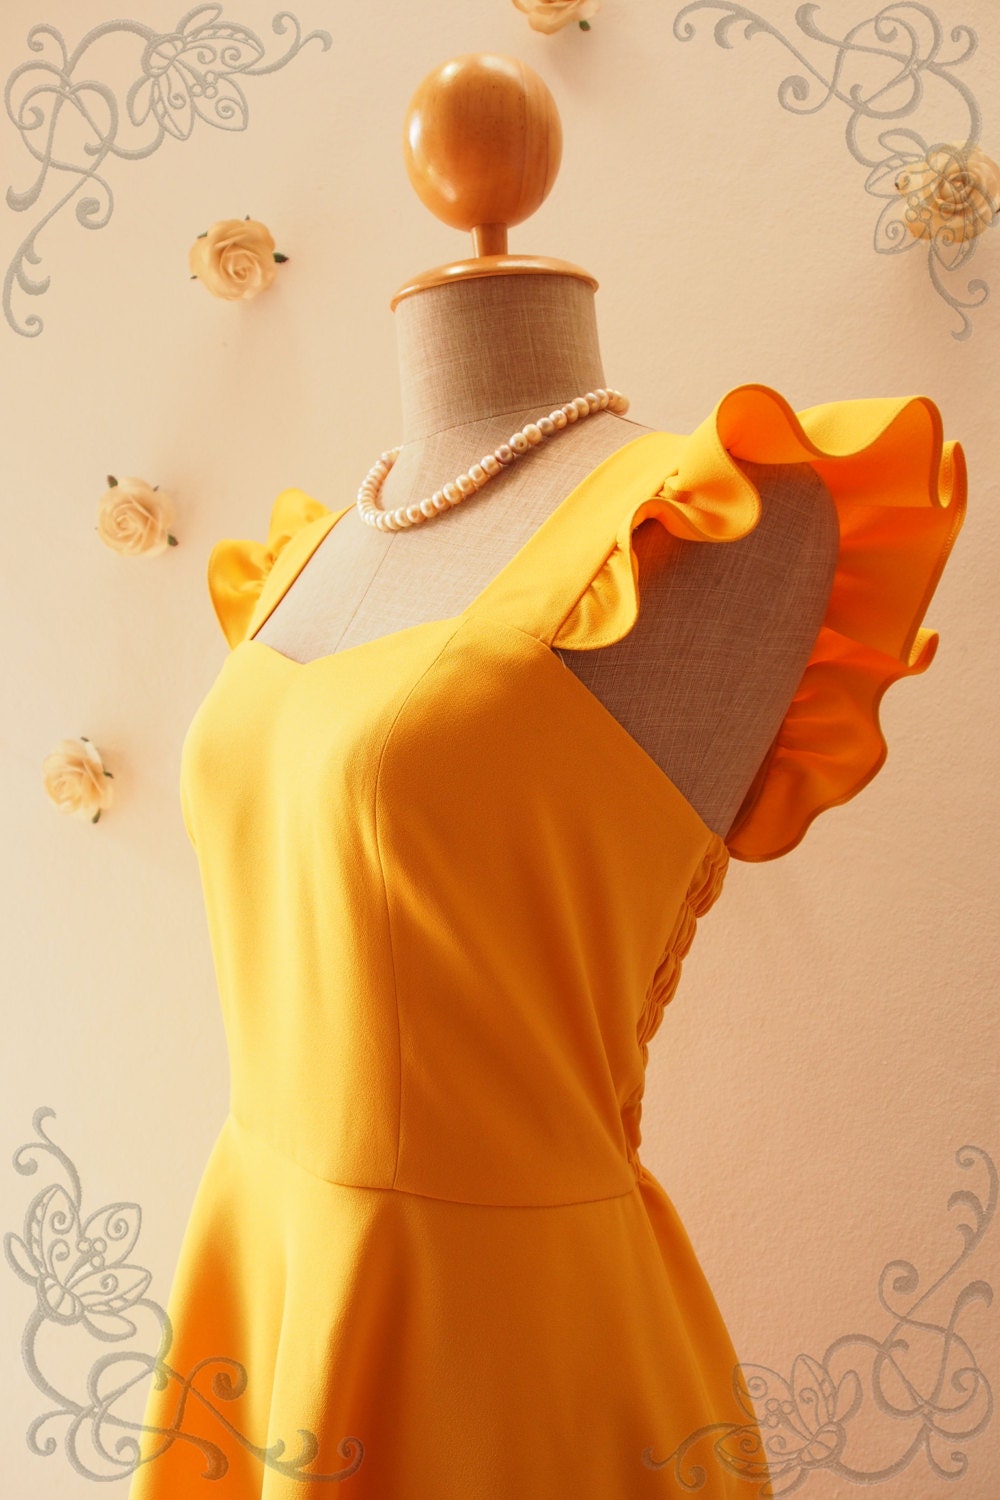 Olivia - Bright Mustard Yellow Dress Ruffle Sleeve Party Bridesmaid Reception Summer Dress -Size Xs-Xl